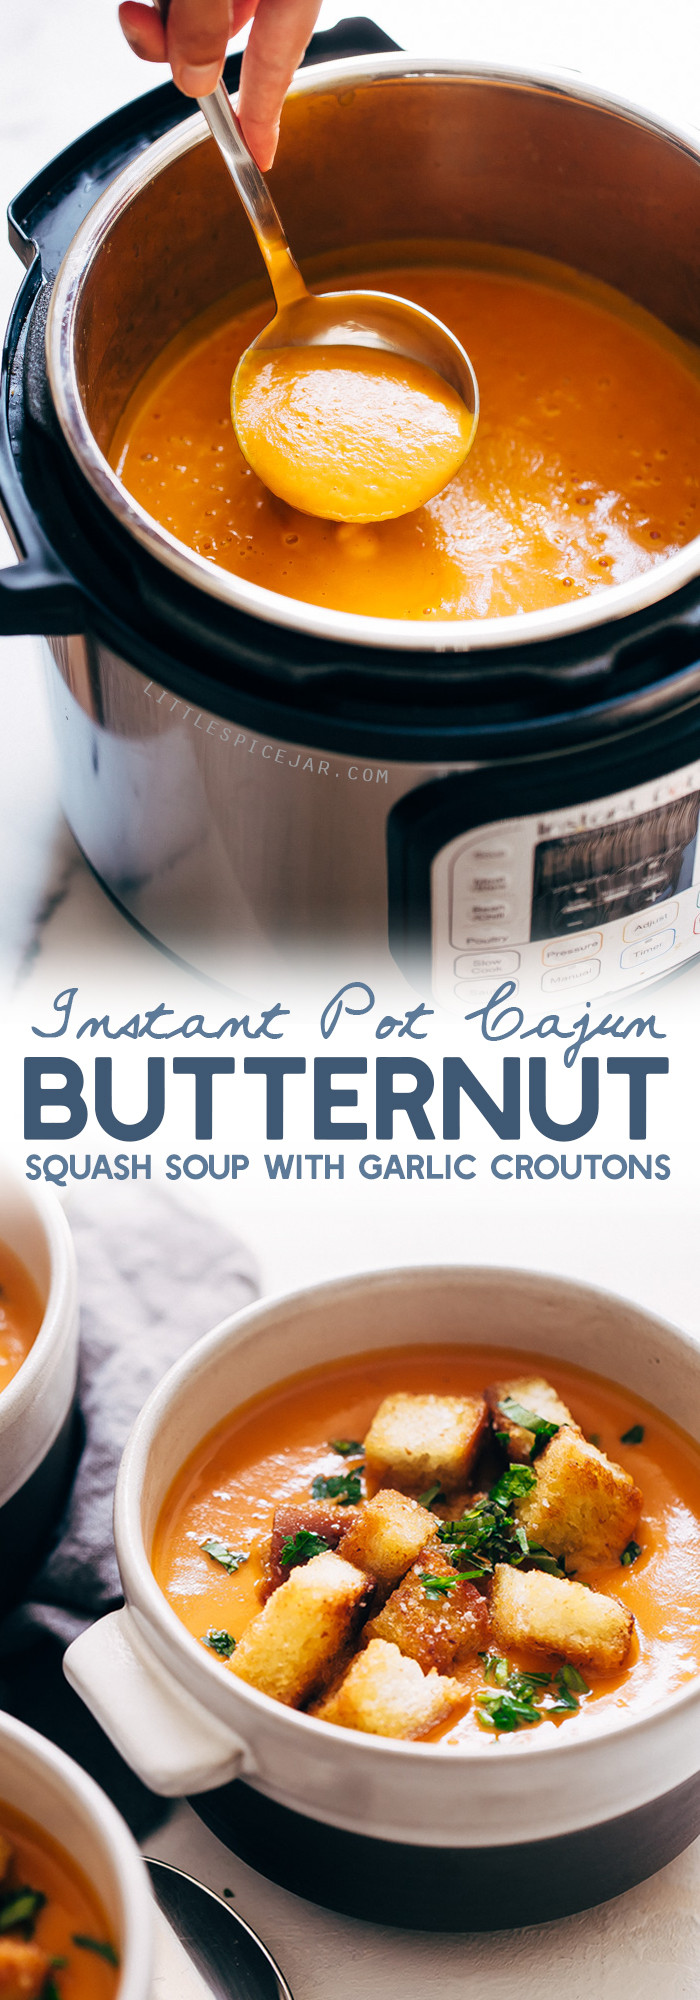 Instant Pot Butternut Squash Recipes
 Instant Pot Cajun Butternut Squash Soup Recipe